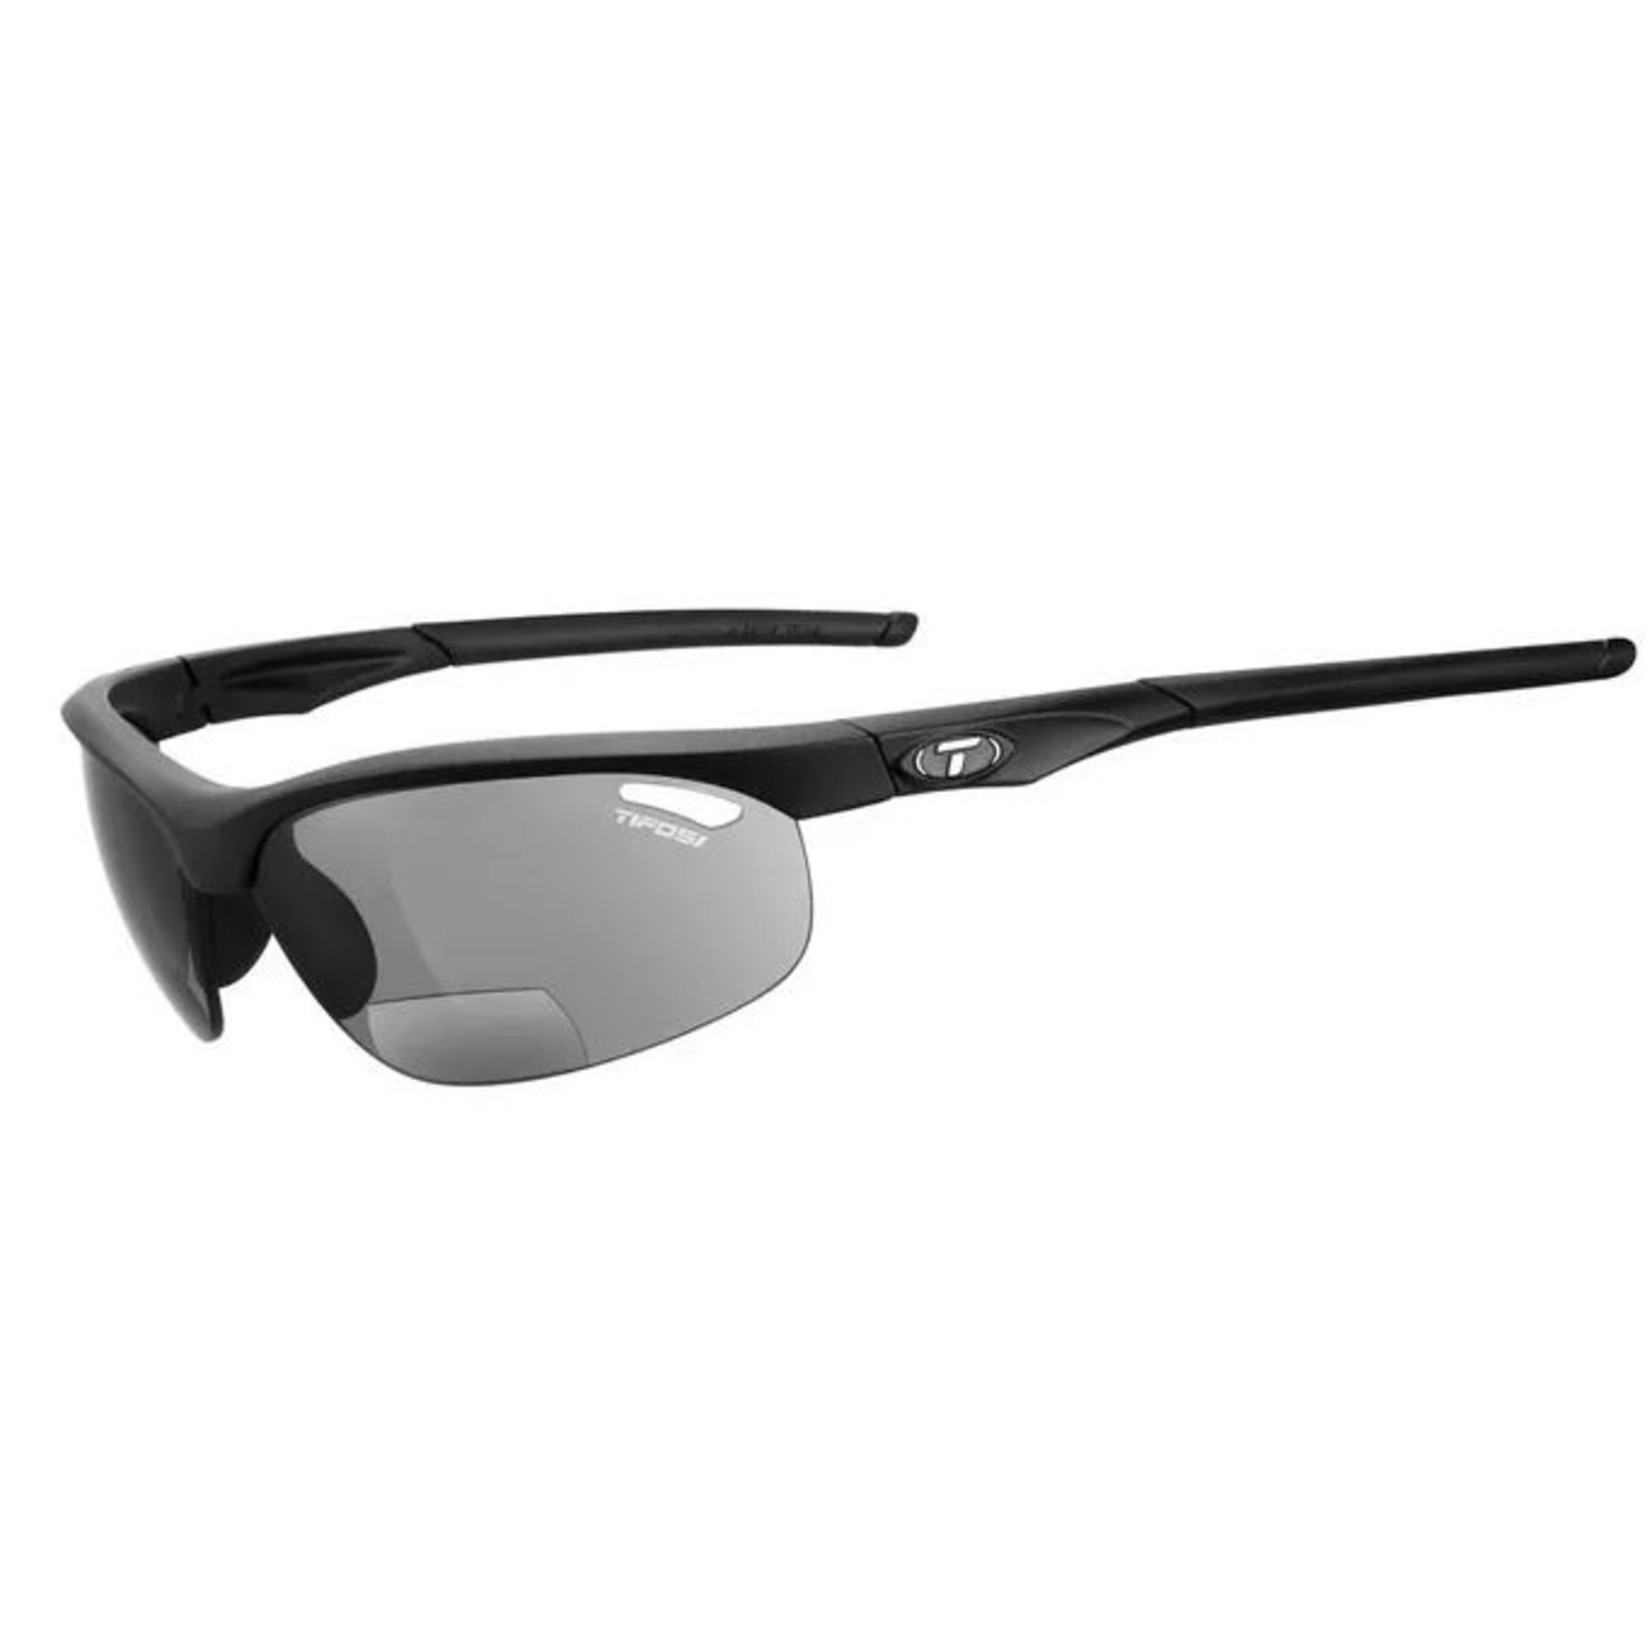 Tifosi Tifosi Veloce Readers Sunglasses +1.5 Reader Glasses - Matte Black